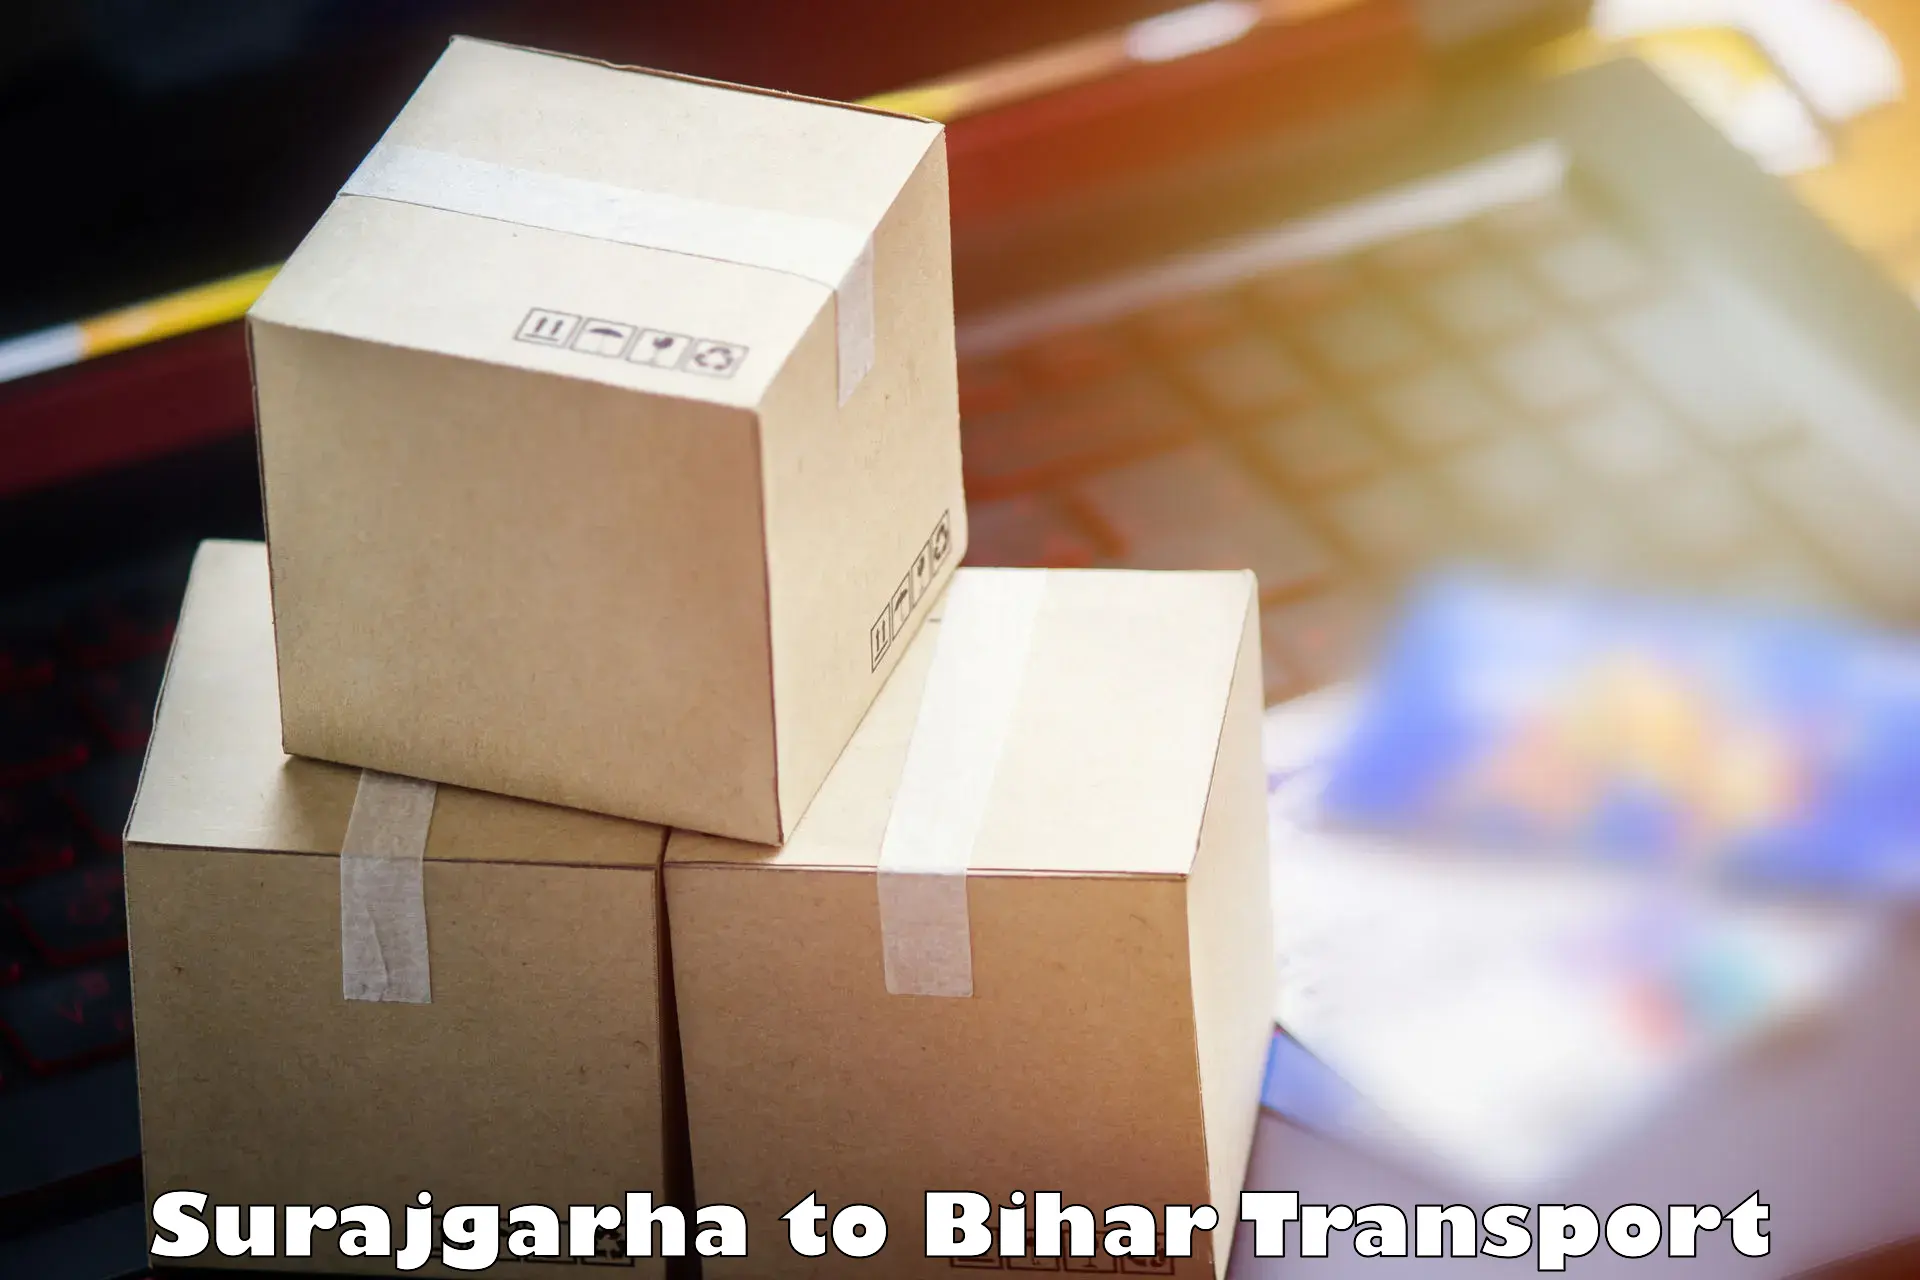 Shipping partner Surajgarha to Mirganj